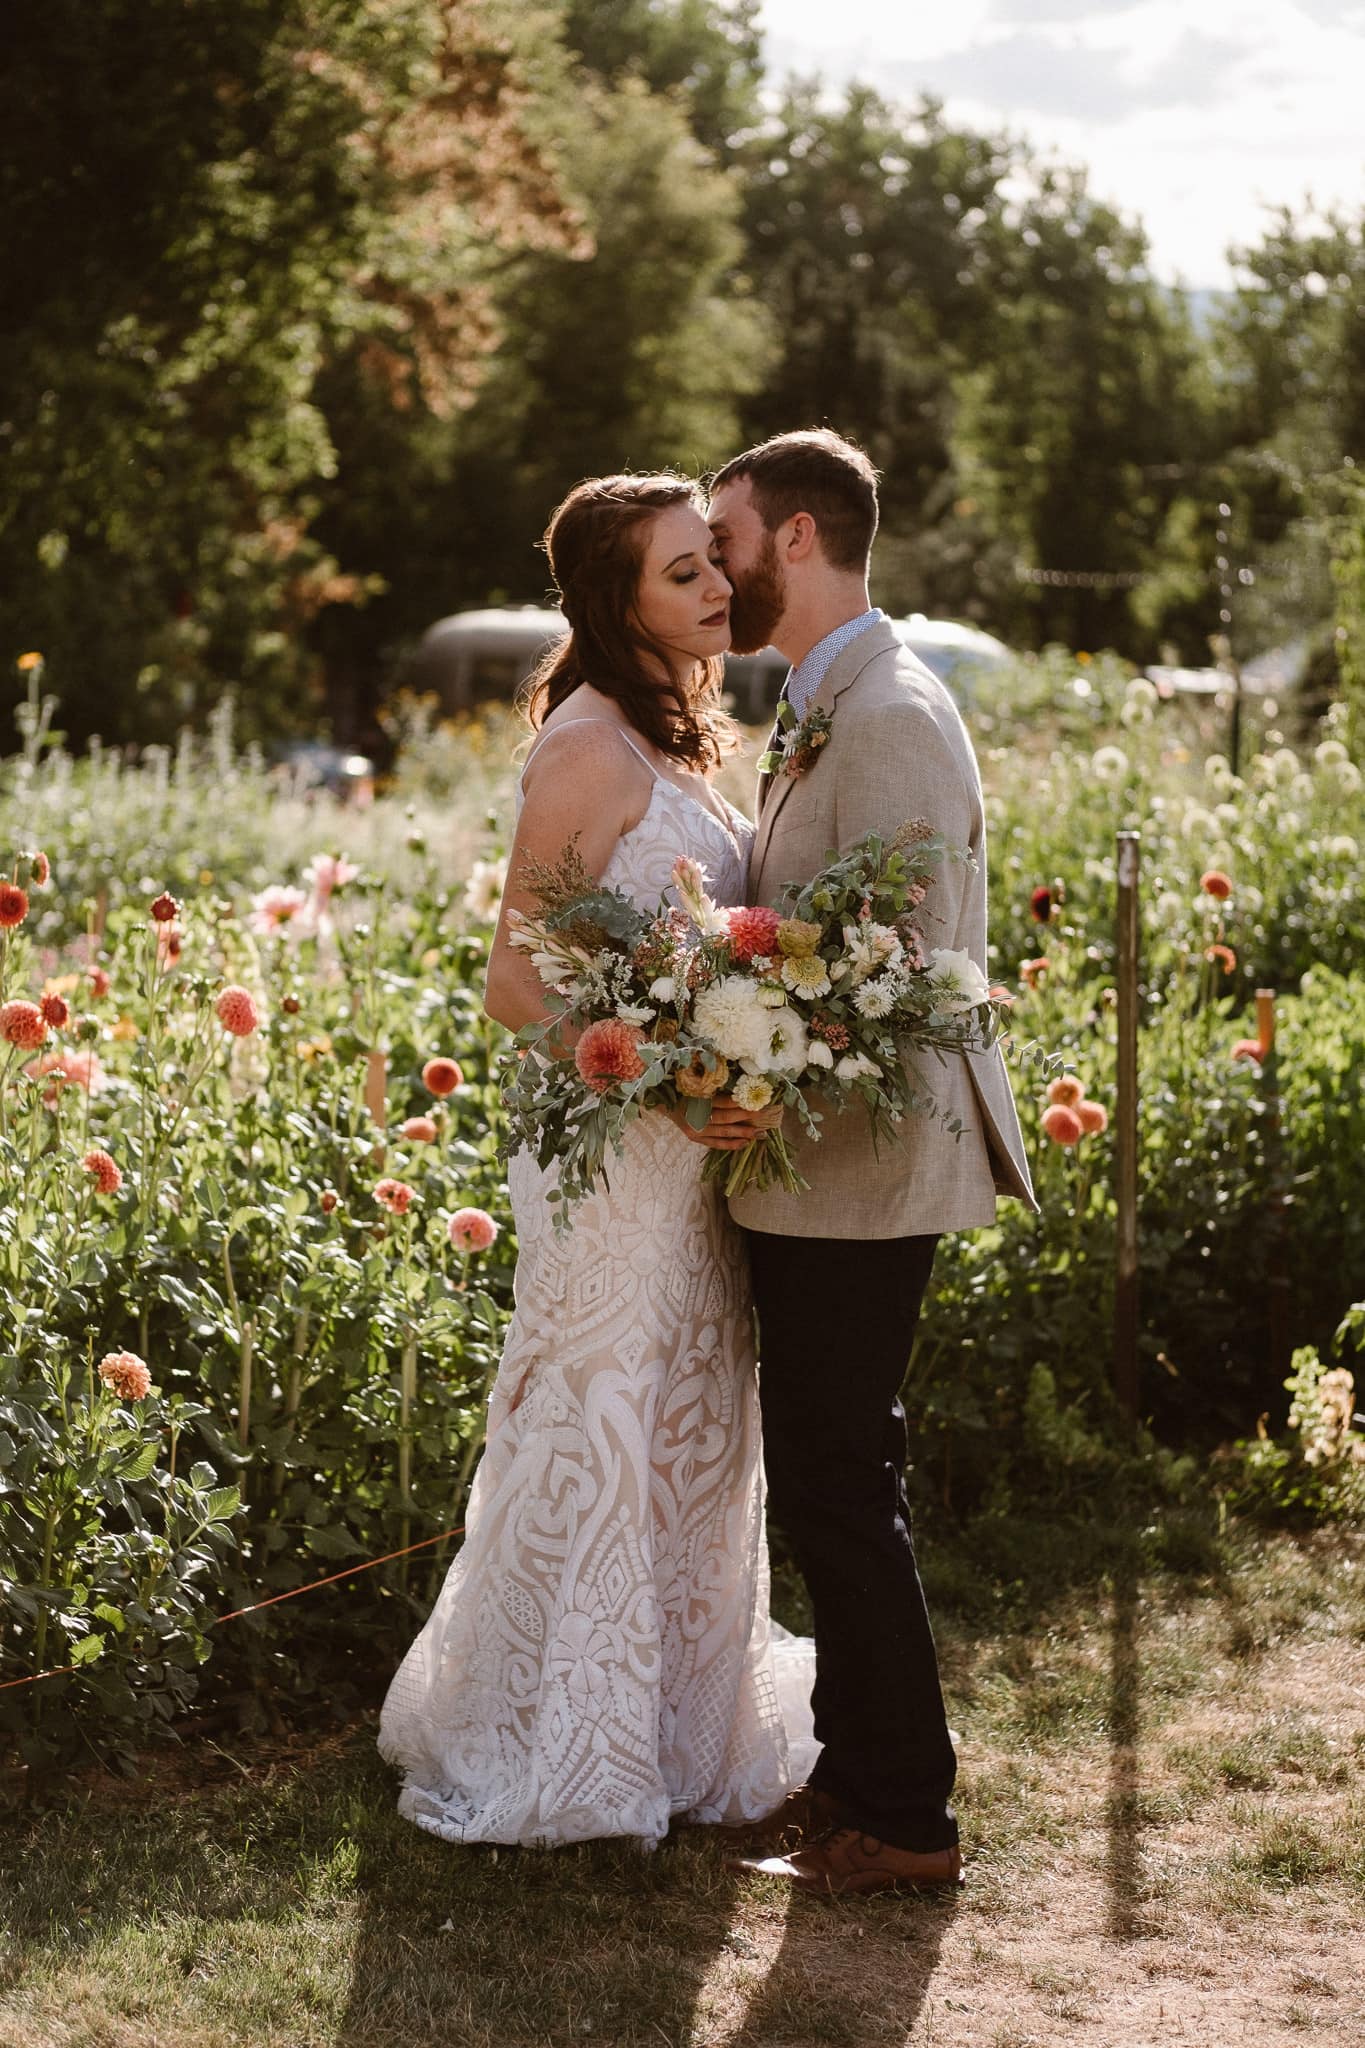 Lyons Farmette wedding photographer, Colorado intimate wedding photographer, bride and groom photos in flower garden